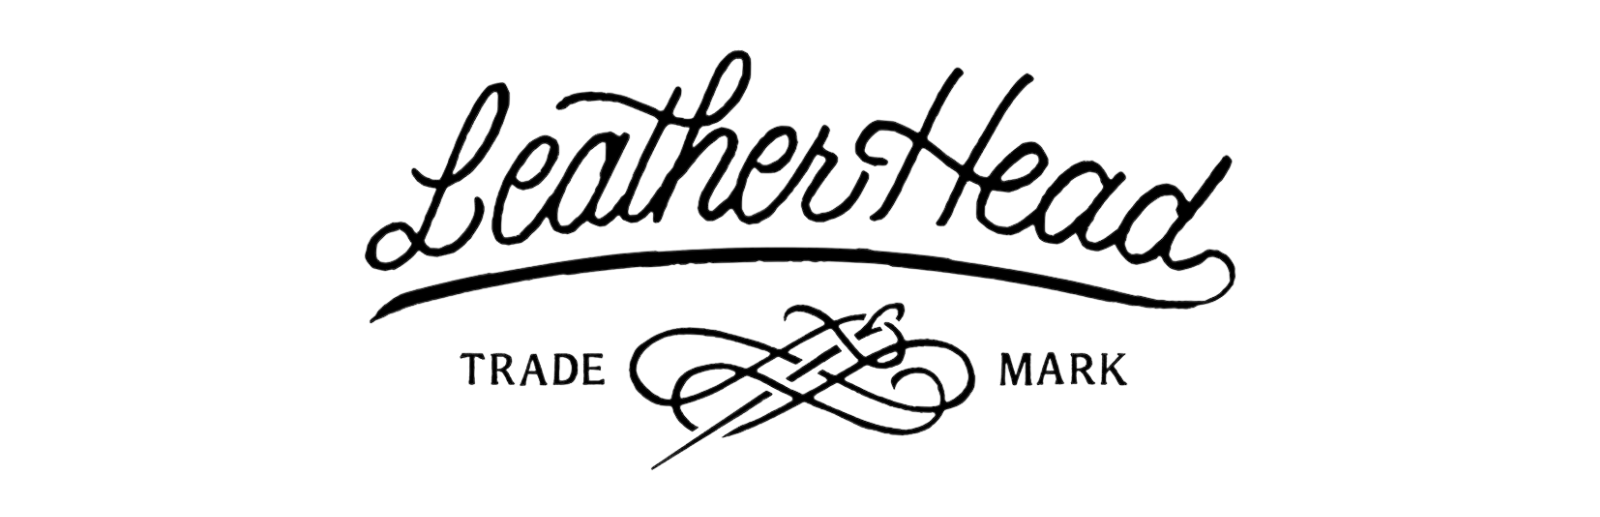 Leather Head Sports Logo